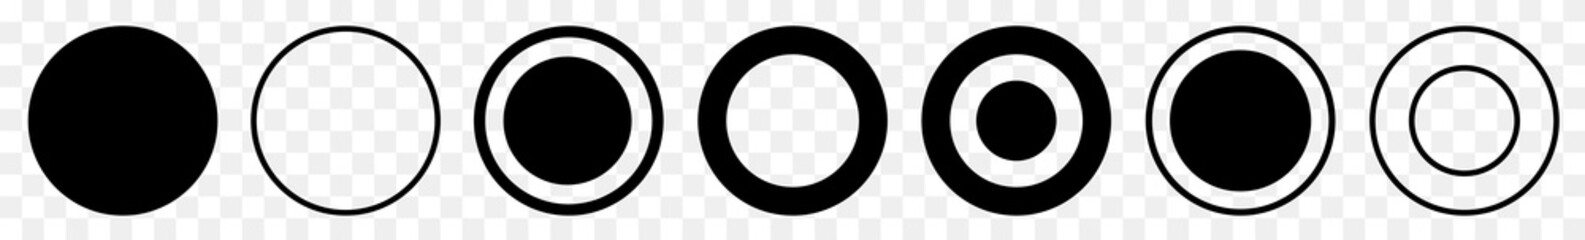 label circle black | circles | logo sticker | emblem round | icon | transparent variations